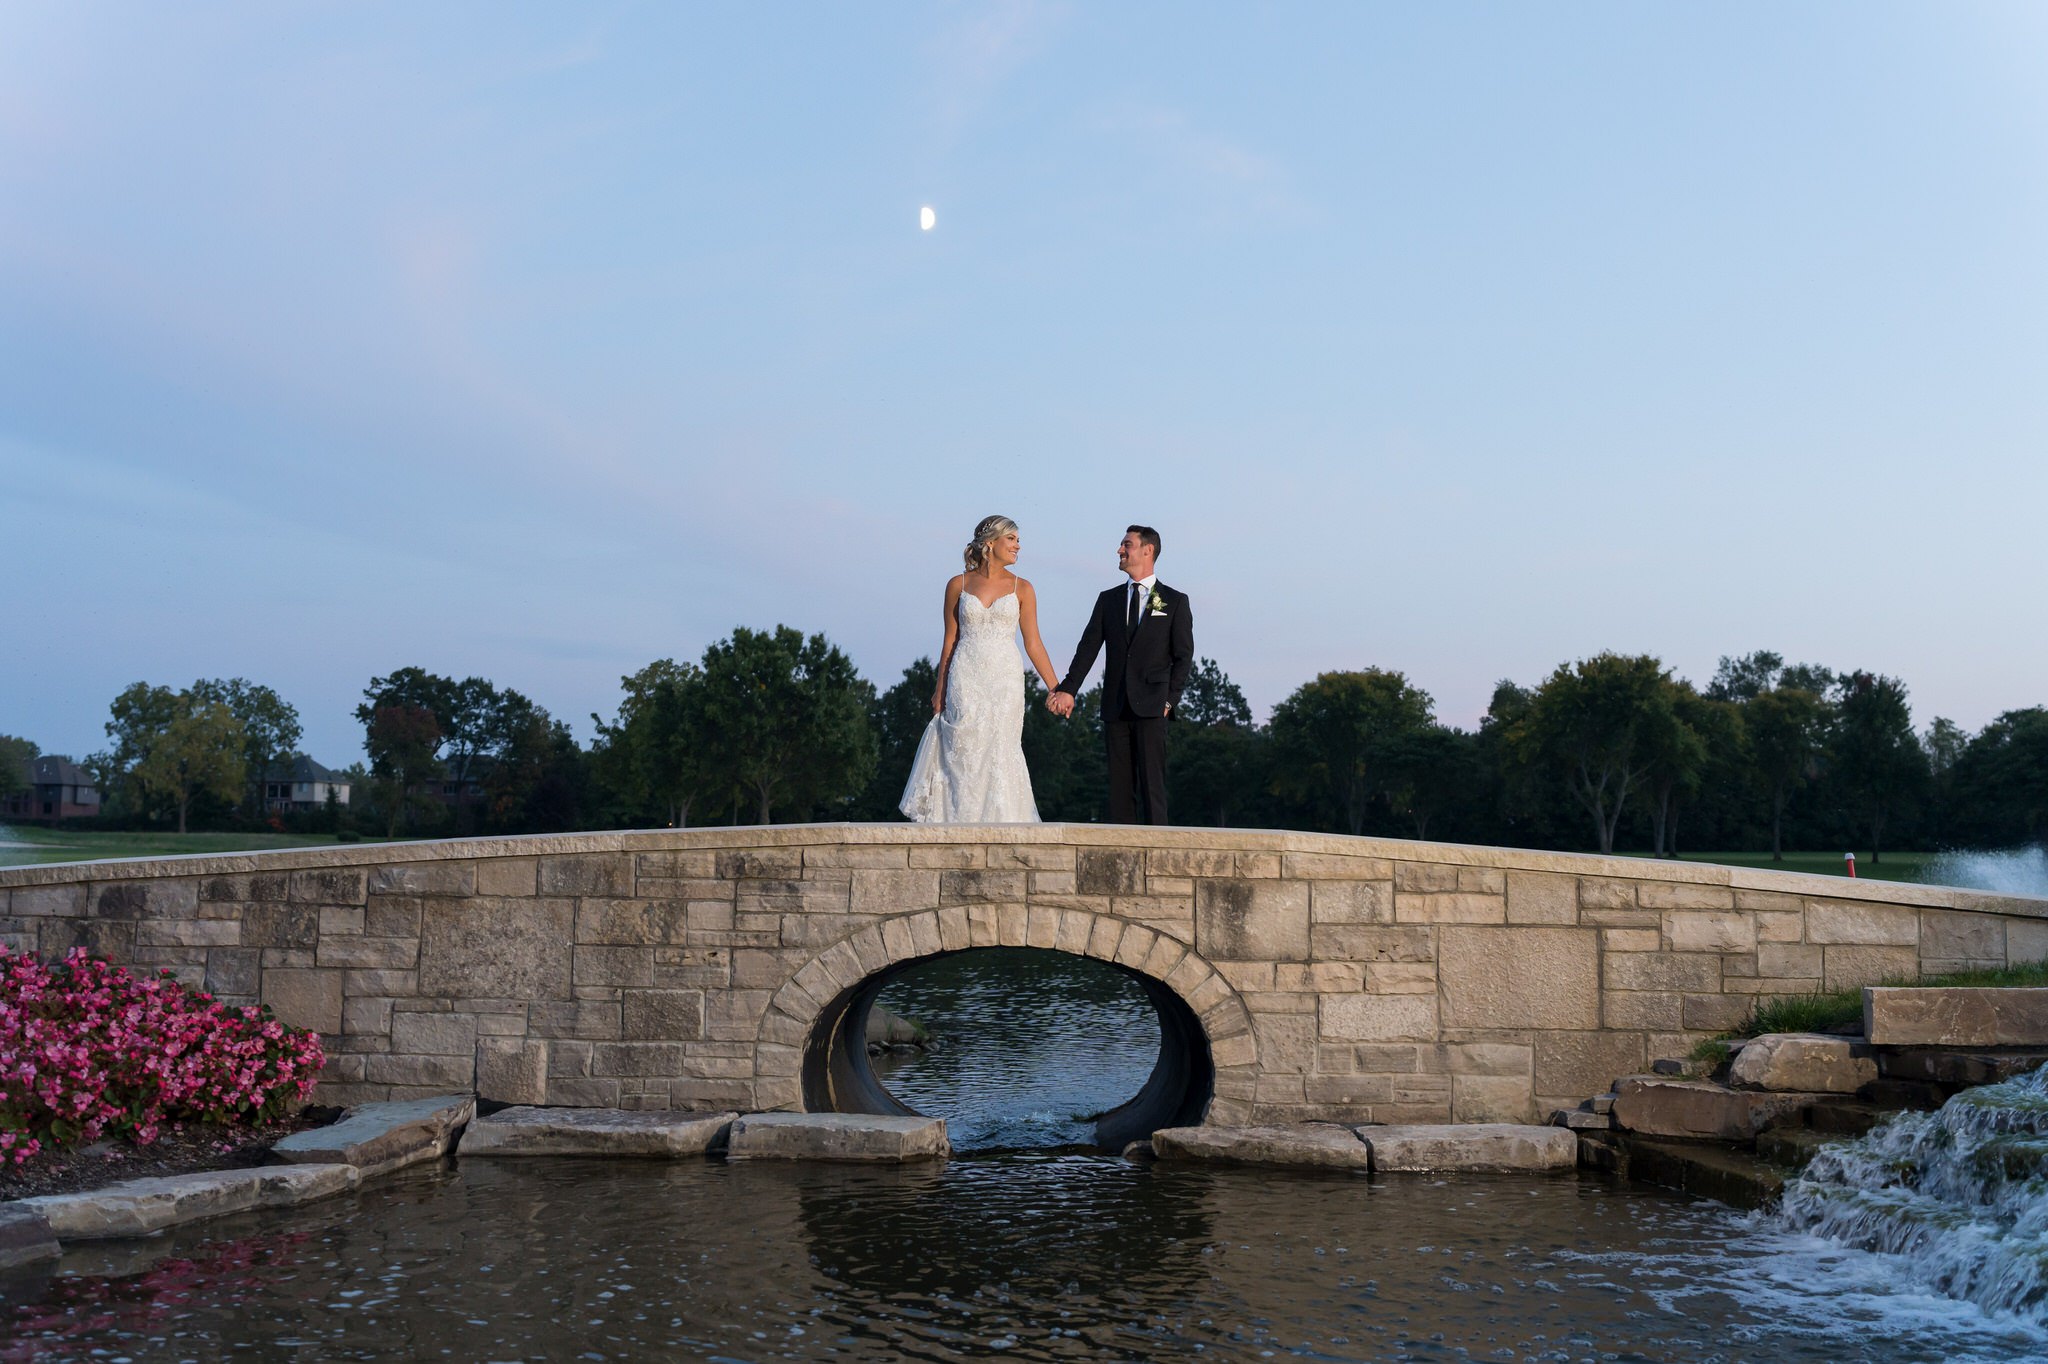 A bride and groom hold hands on the stone bridge at their Walnut Creek Golf Club wedding in South Lyon, MI.  